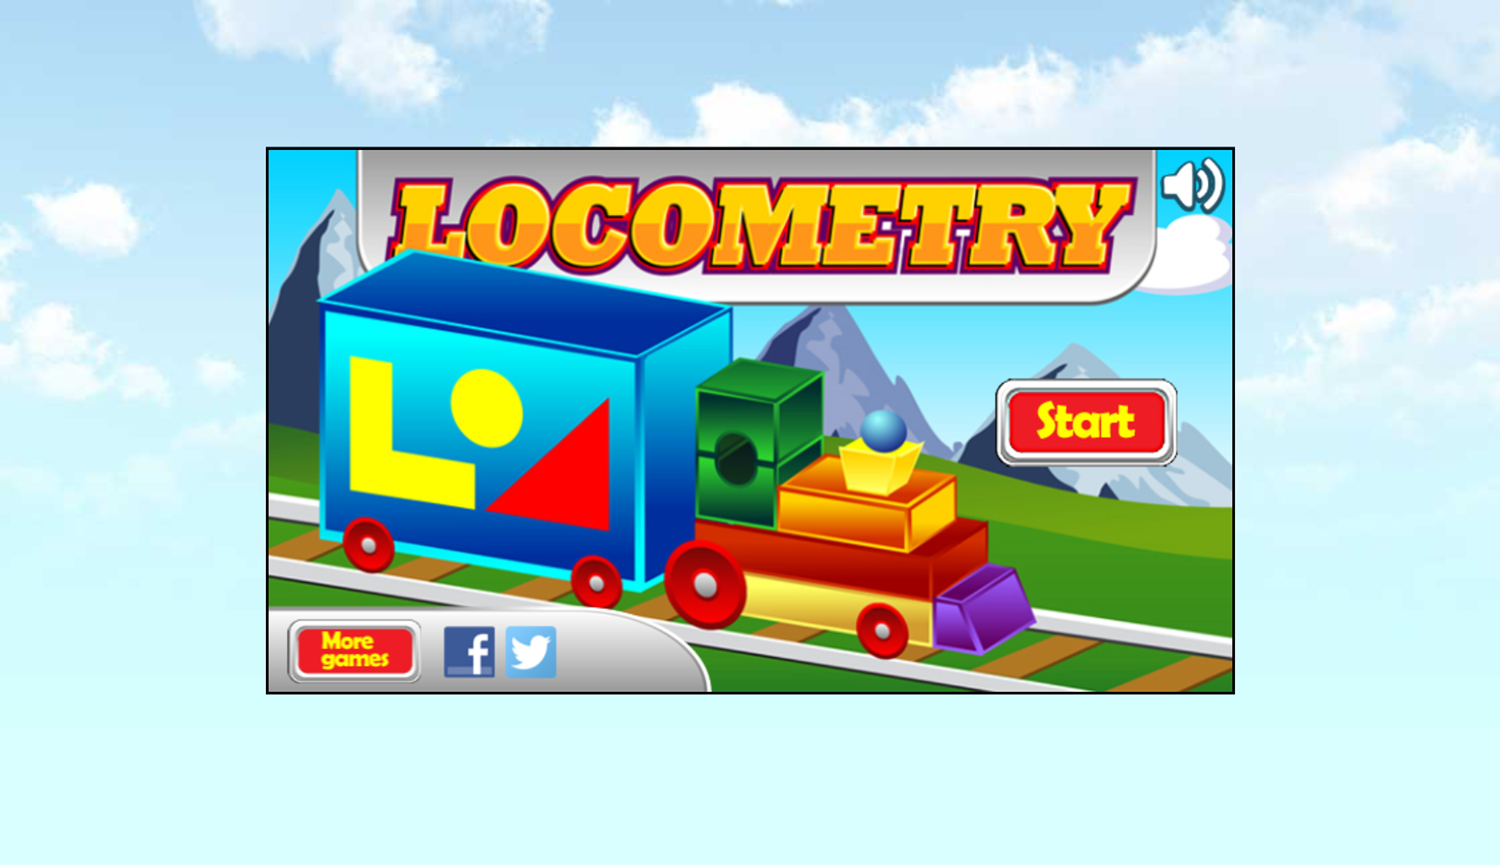 Locometry Game Welcome Screen Screenshot.